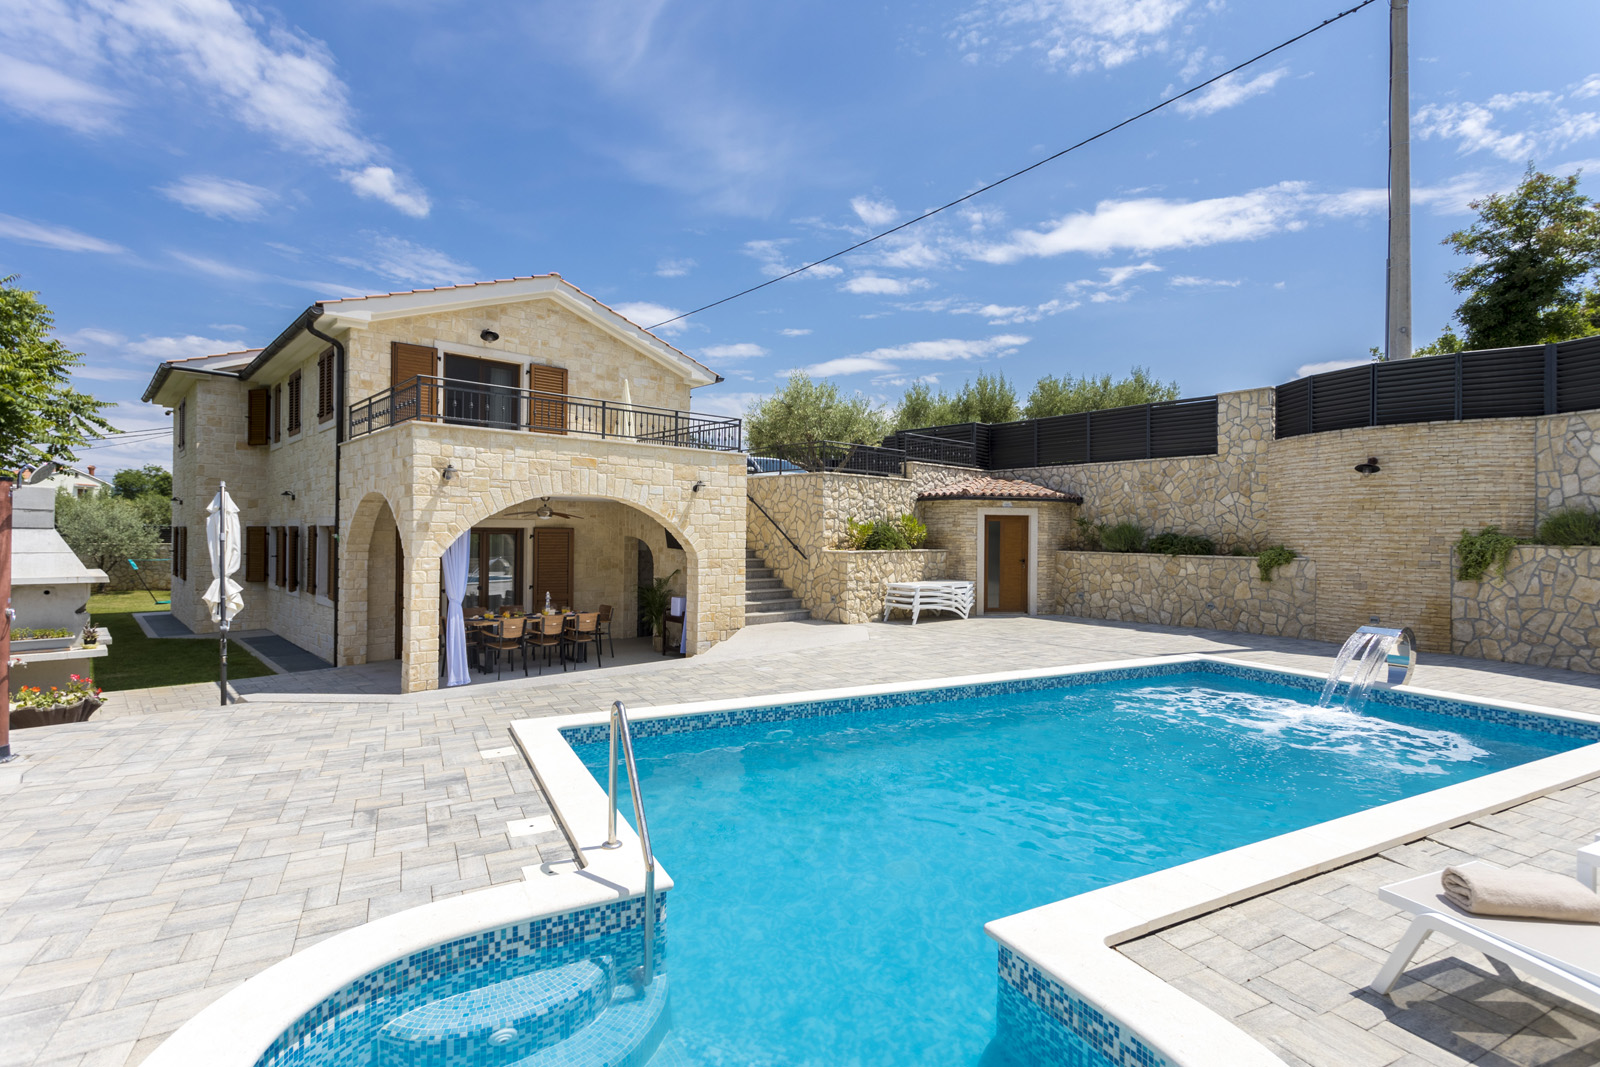 Villa SERENITY with pool, sauna and jacuzzi